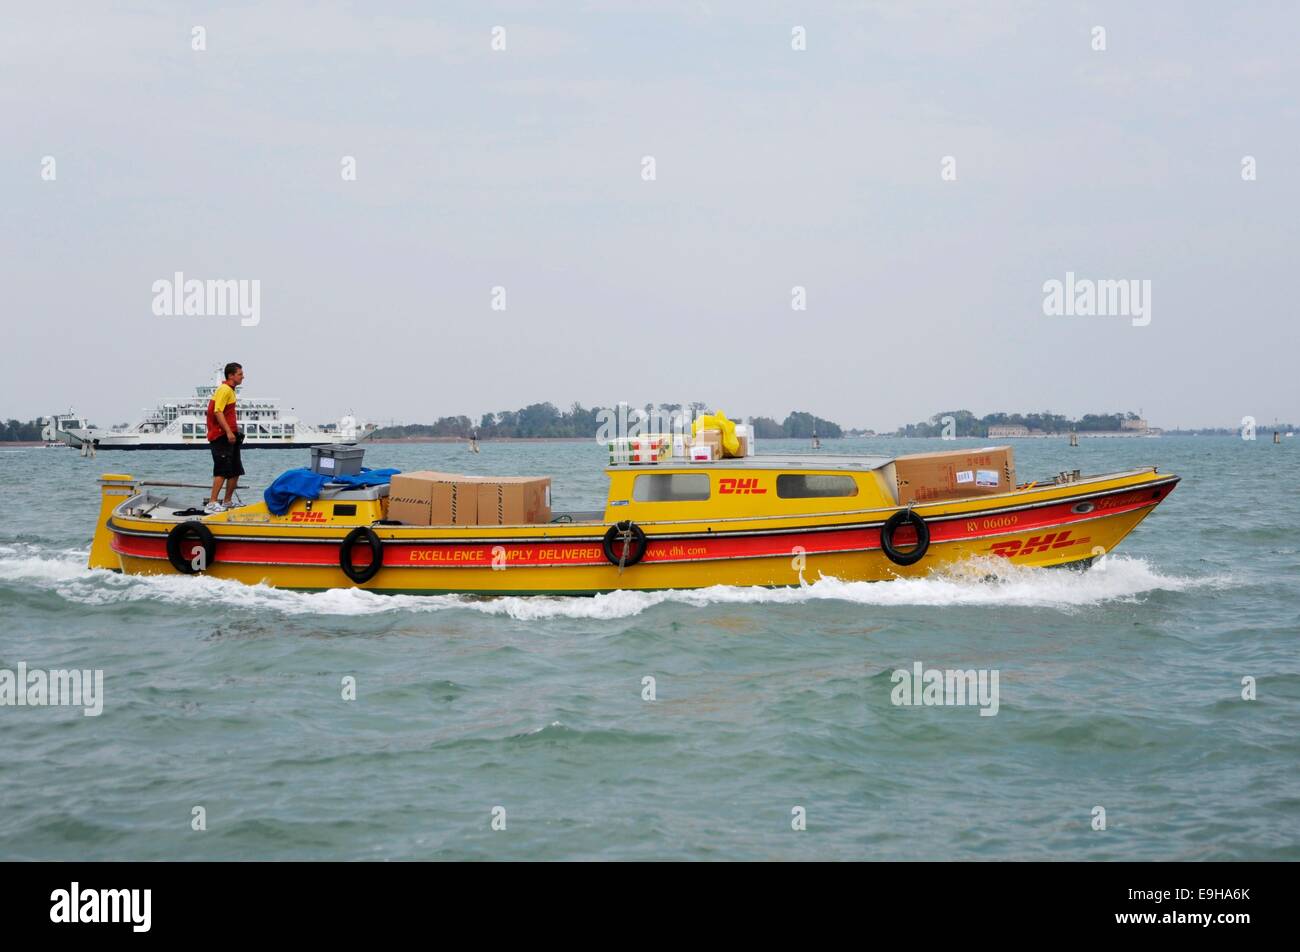 DHL Paket Schiff Pakete, Venedig, Venezien, Italien Stockfotografie - Alamy